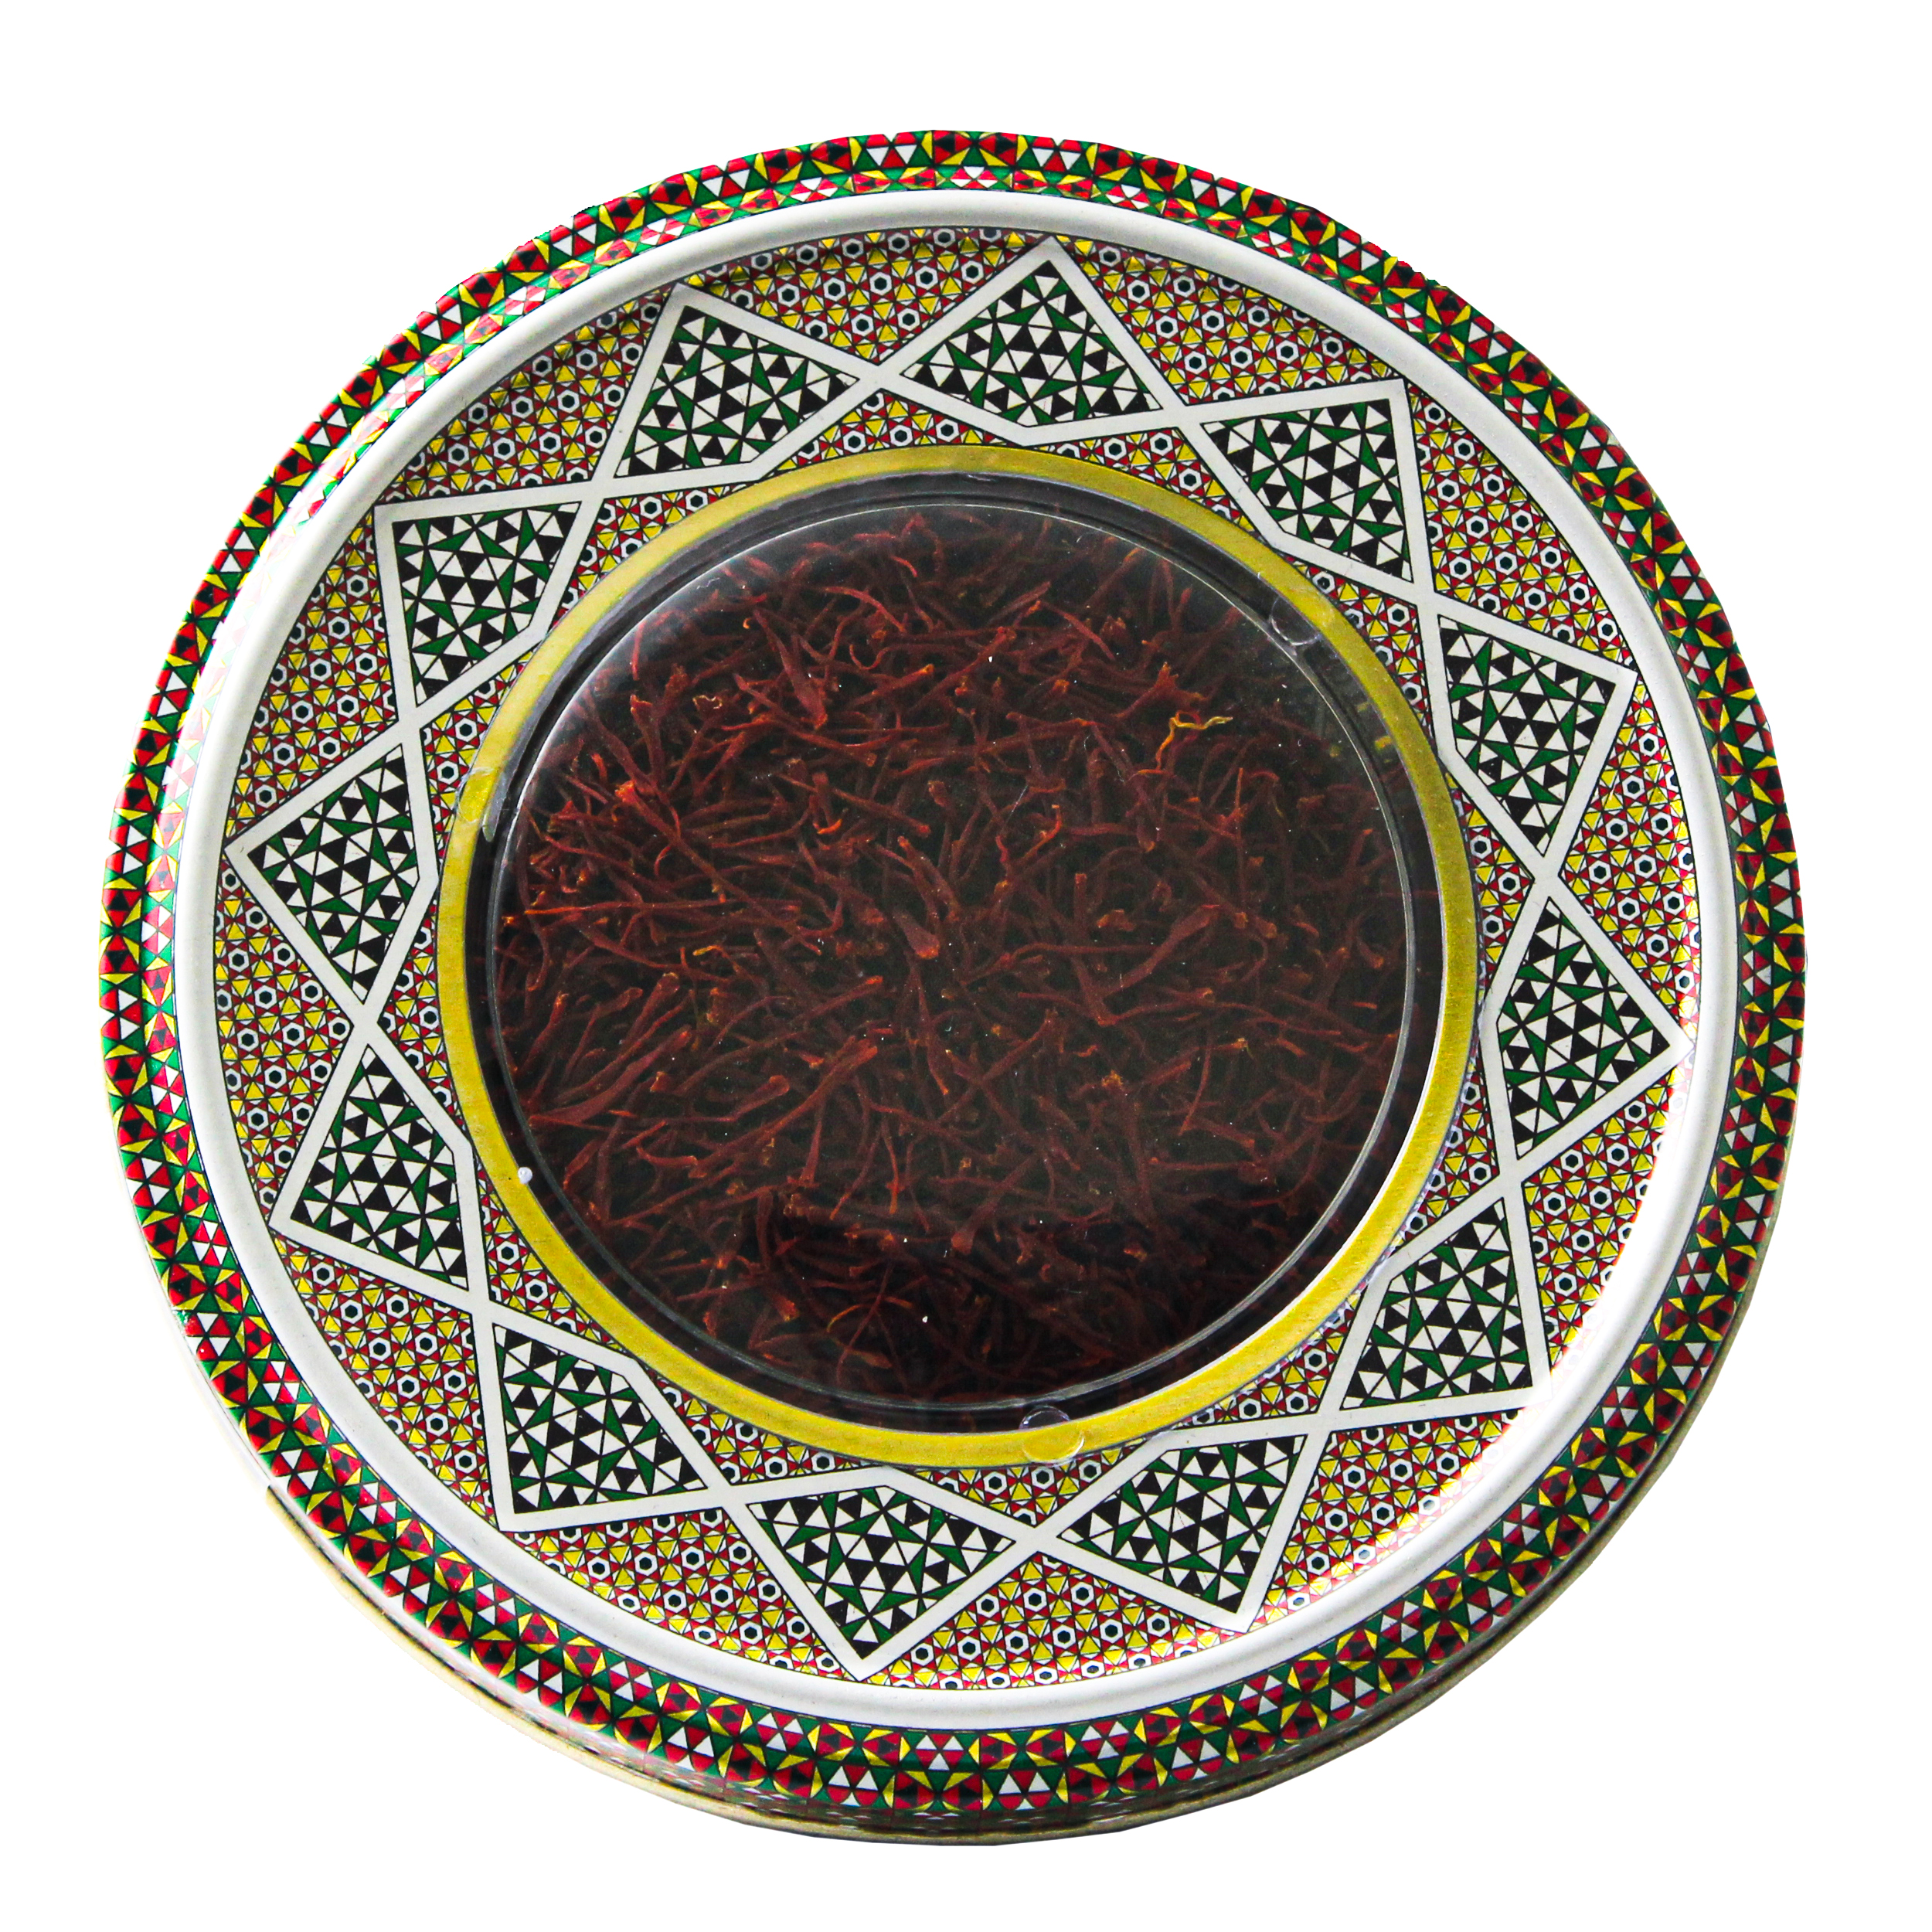 زعفران سرگل احمدپور - 4.608 گرم